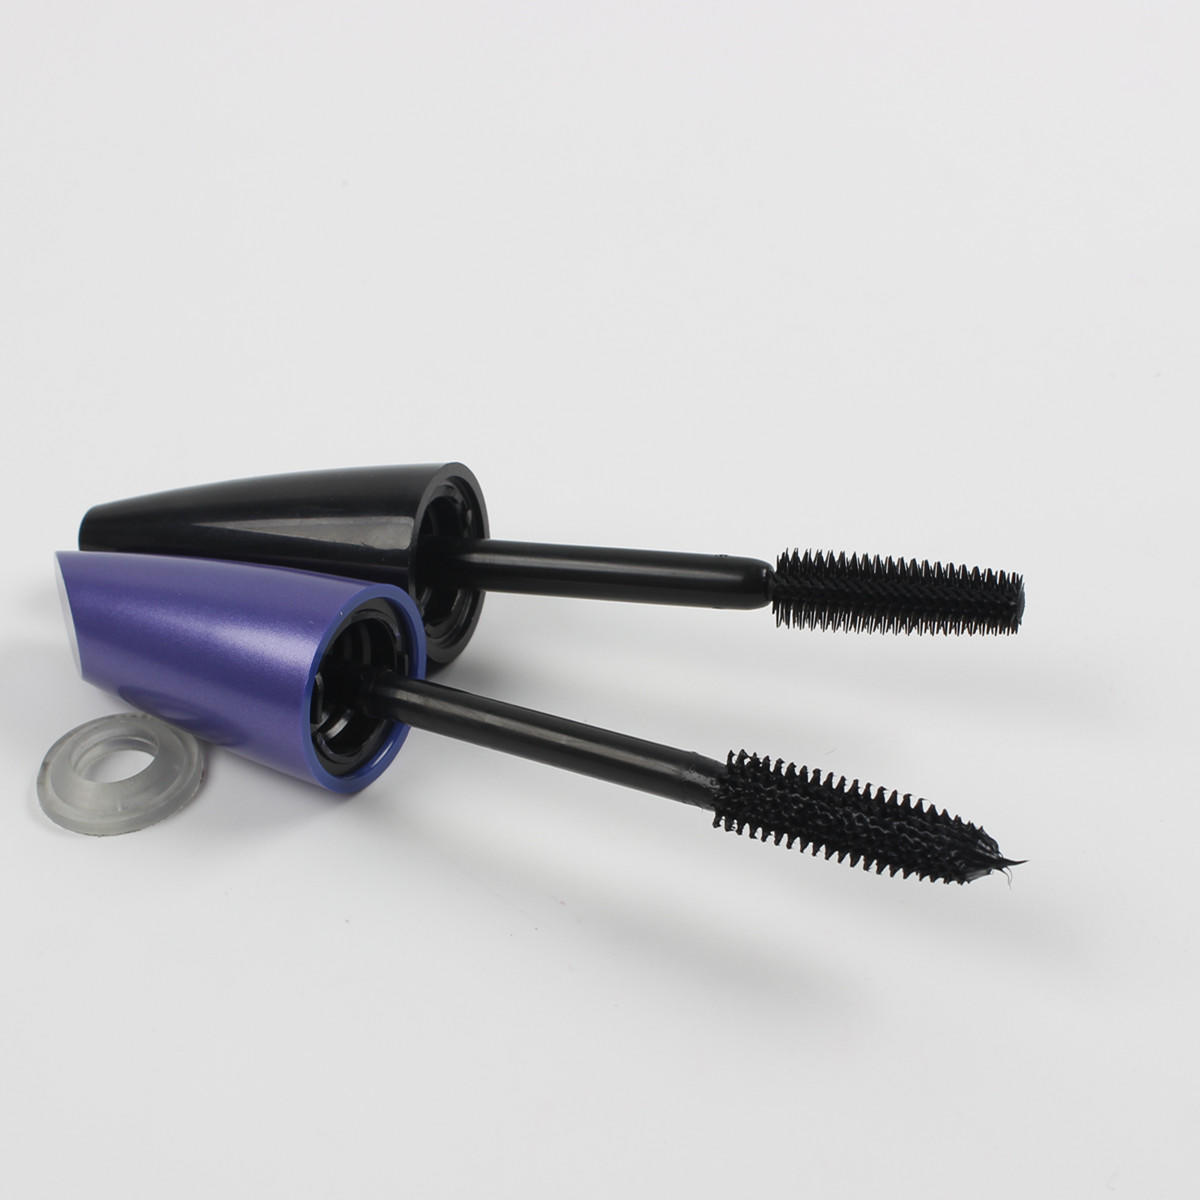 5ml mascara wand tubes and lip gloss tube square empty mascara tubes with brush